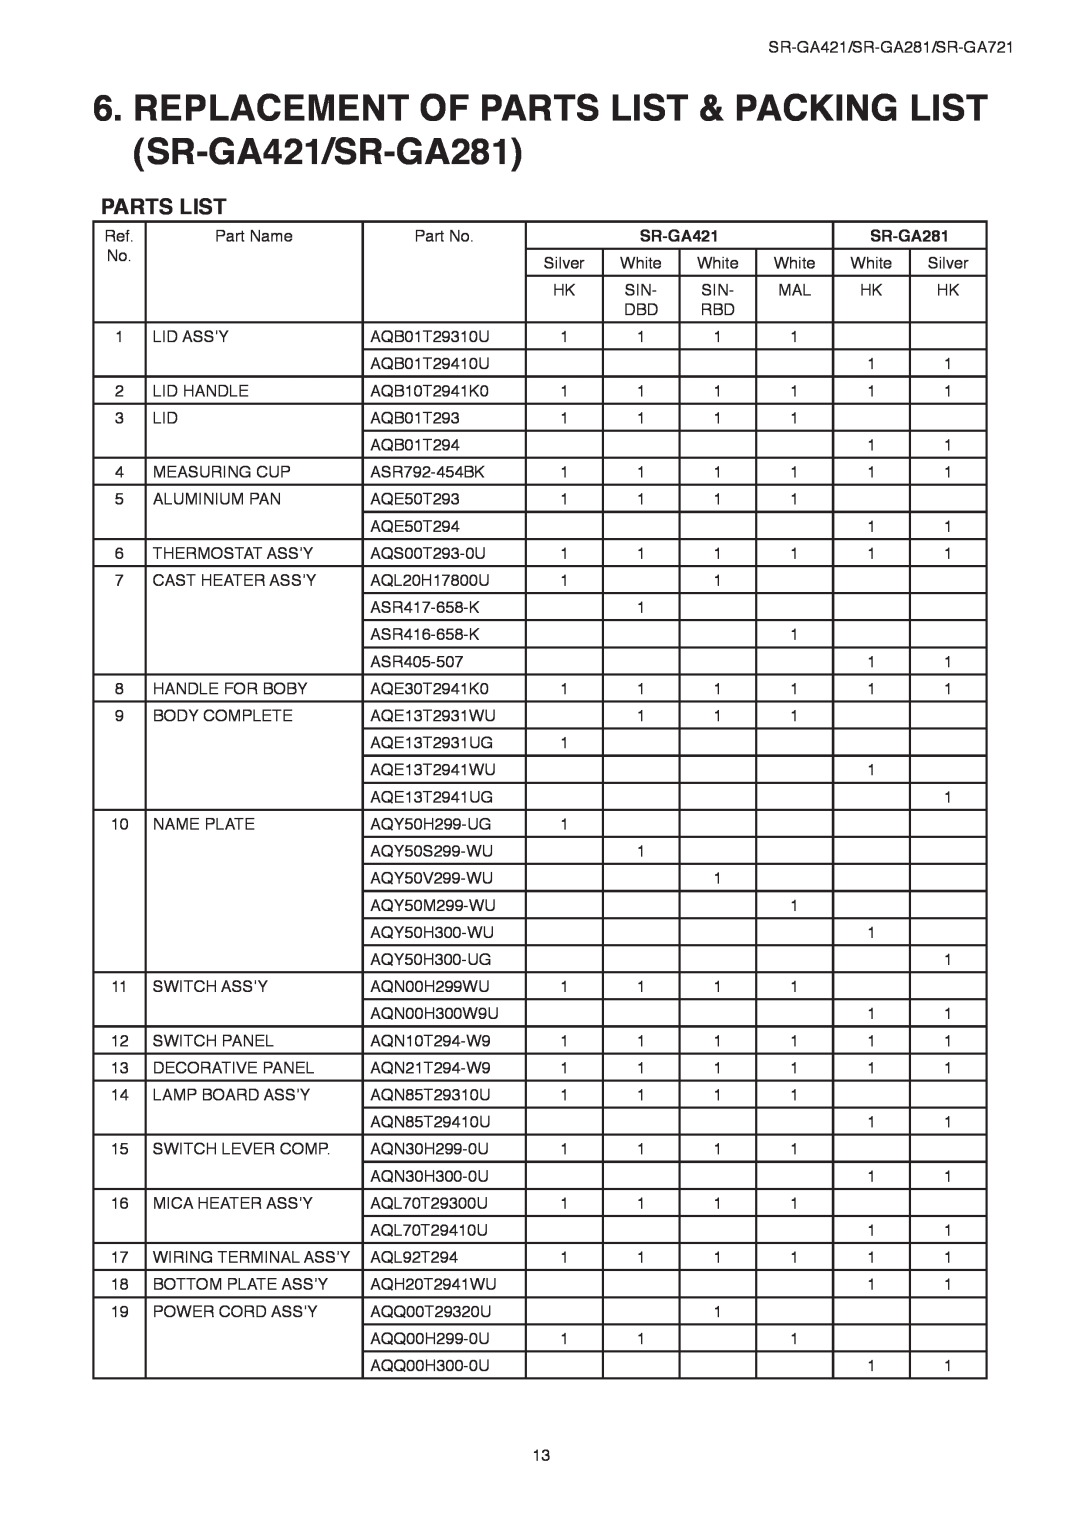 Panasonic service manual REPLACEMENT OF PARTS LIST & PACKING LIST SR-GA421/SR-GA281, Parts List 